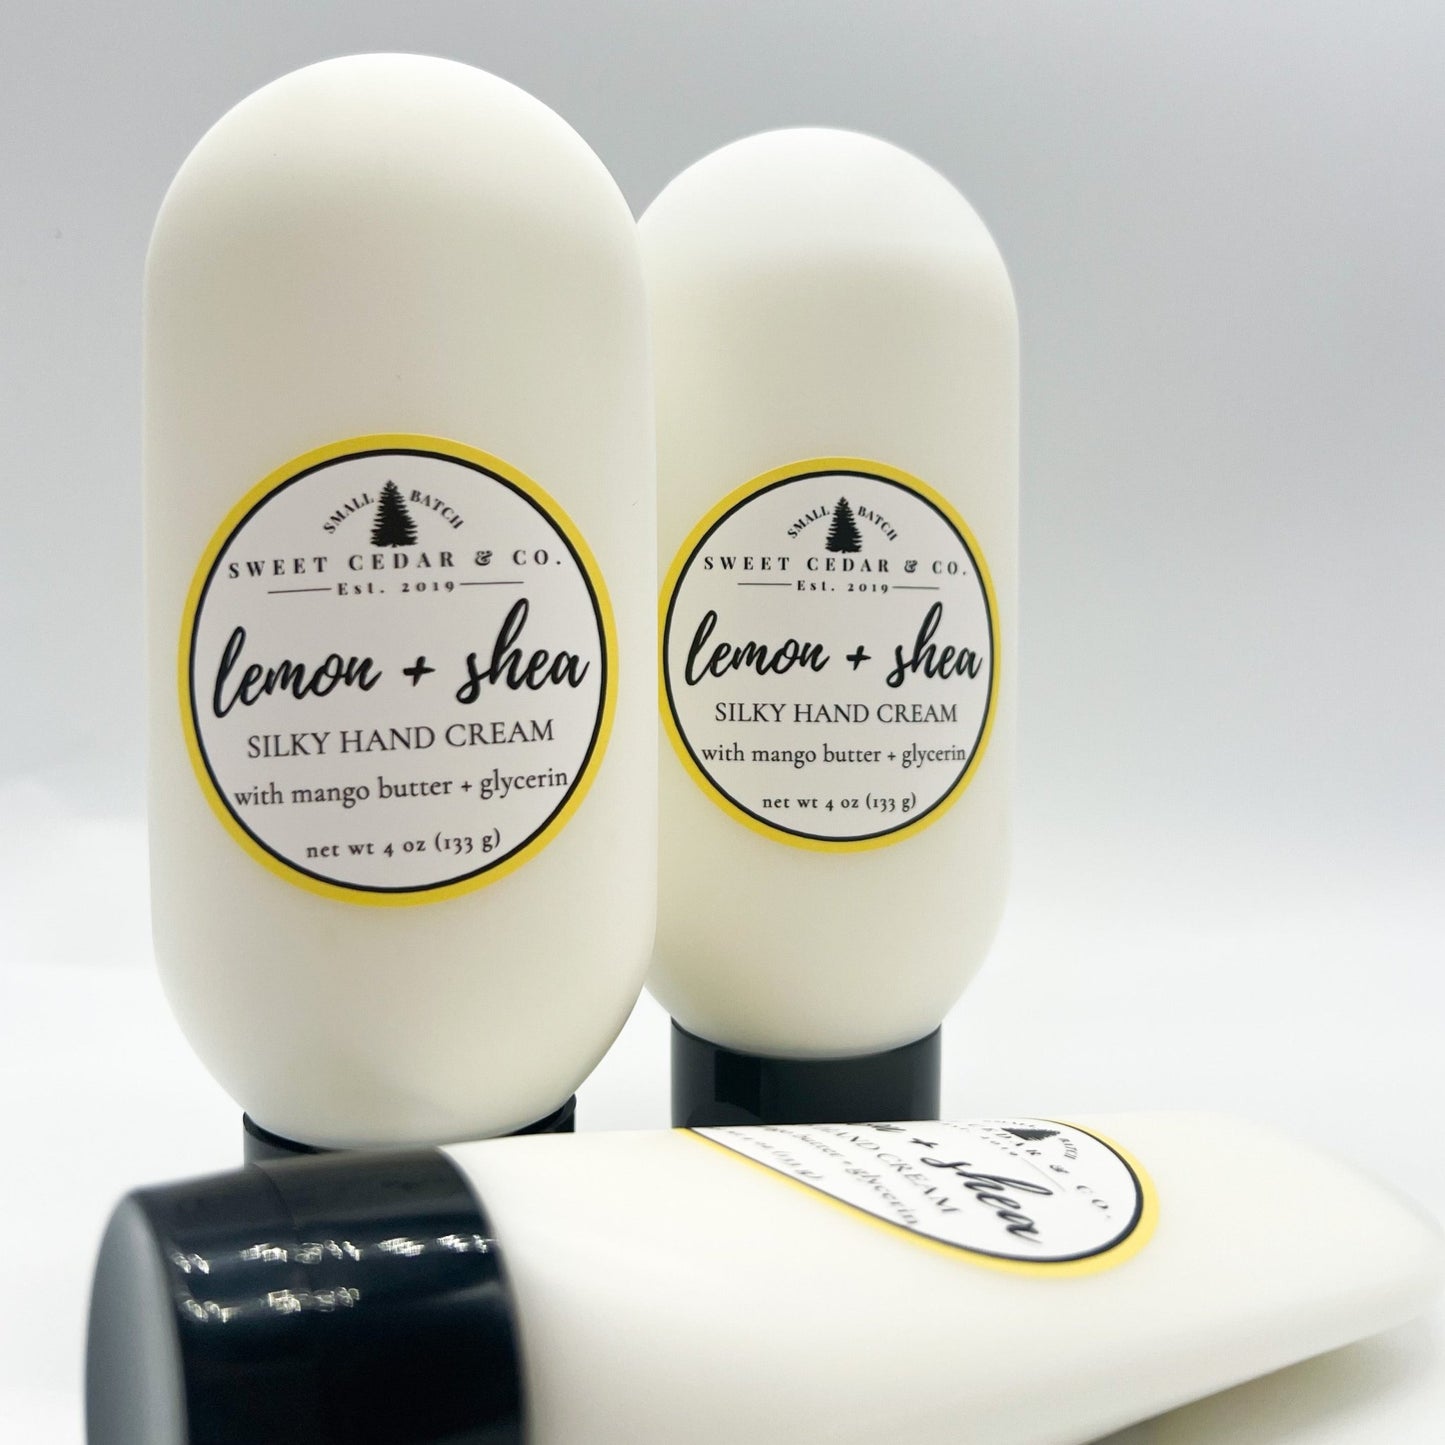 lemon & shea silky hand cream - Sweet Cedar & Co.